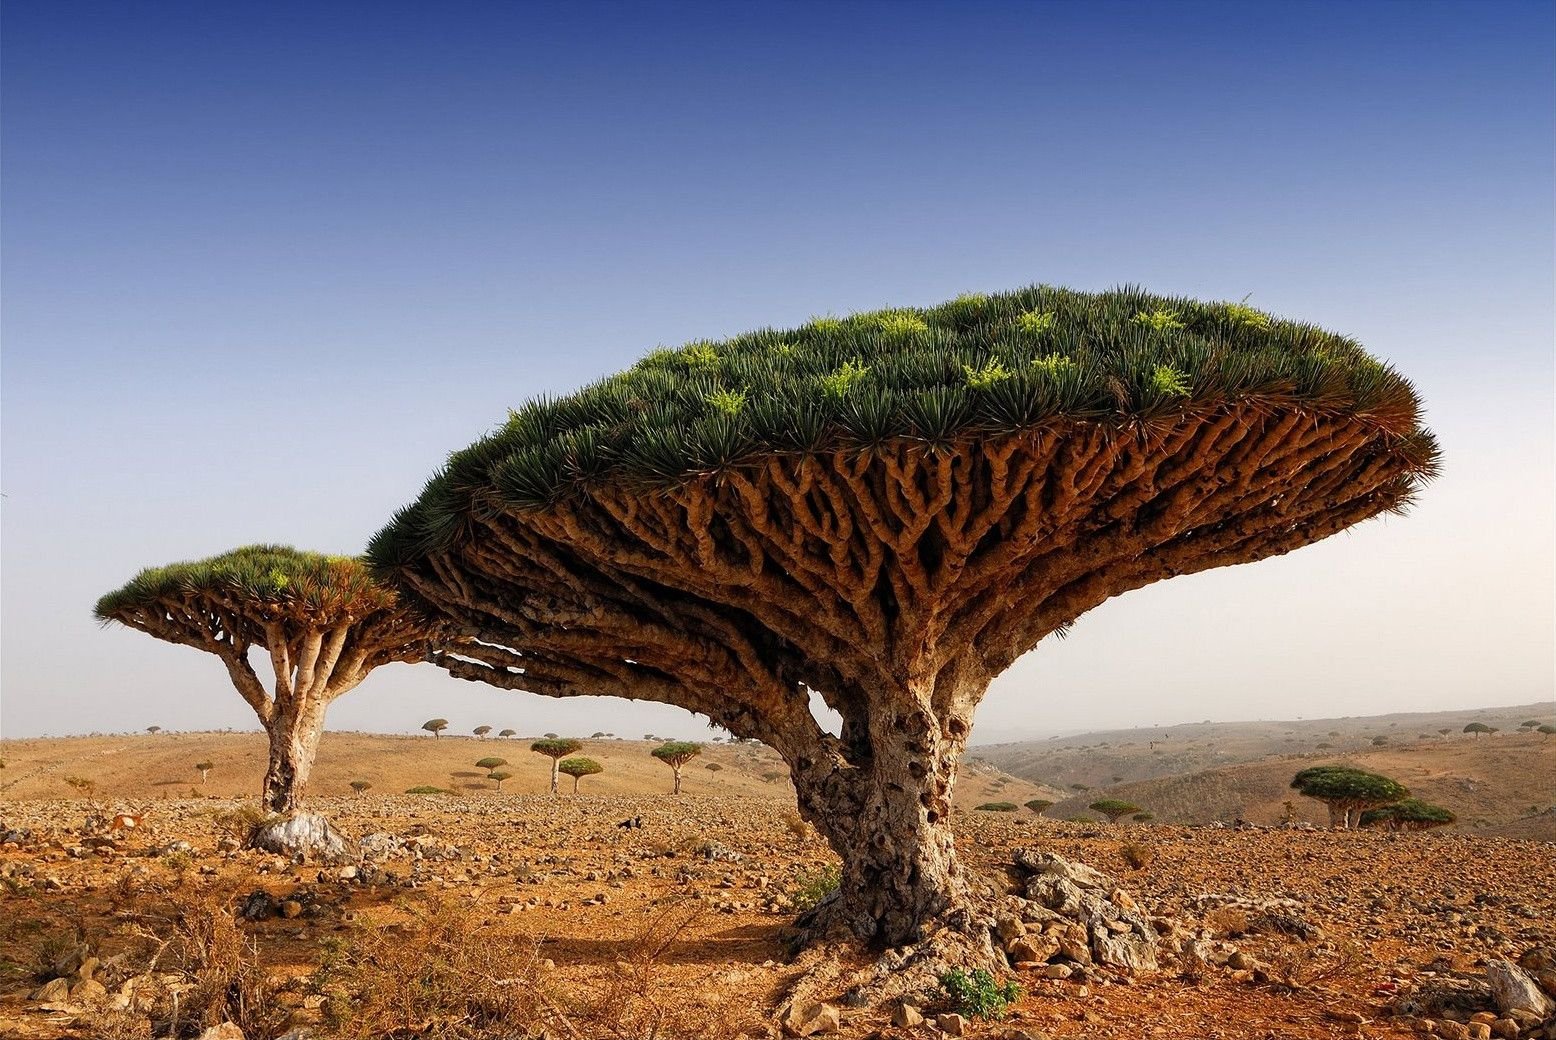 Locuri neobișnuite din lume. Insula Socotra, Yemen